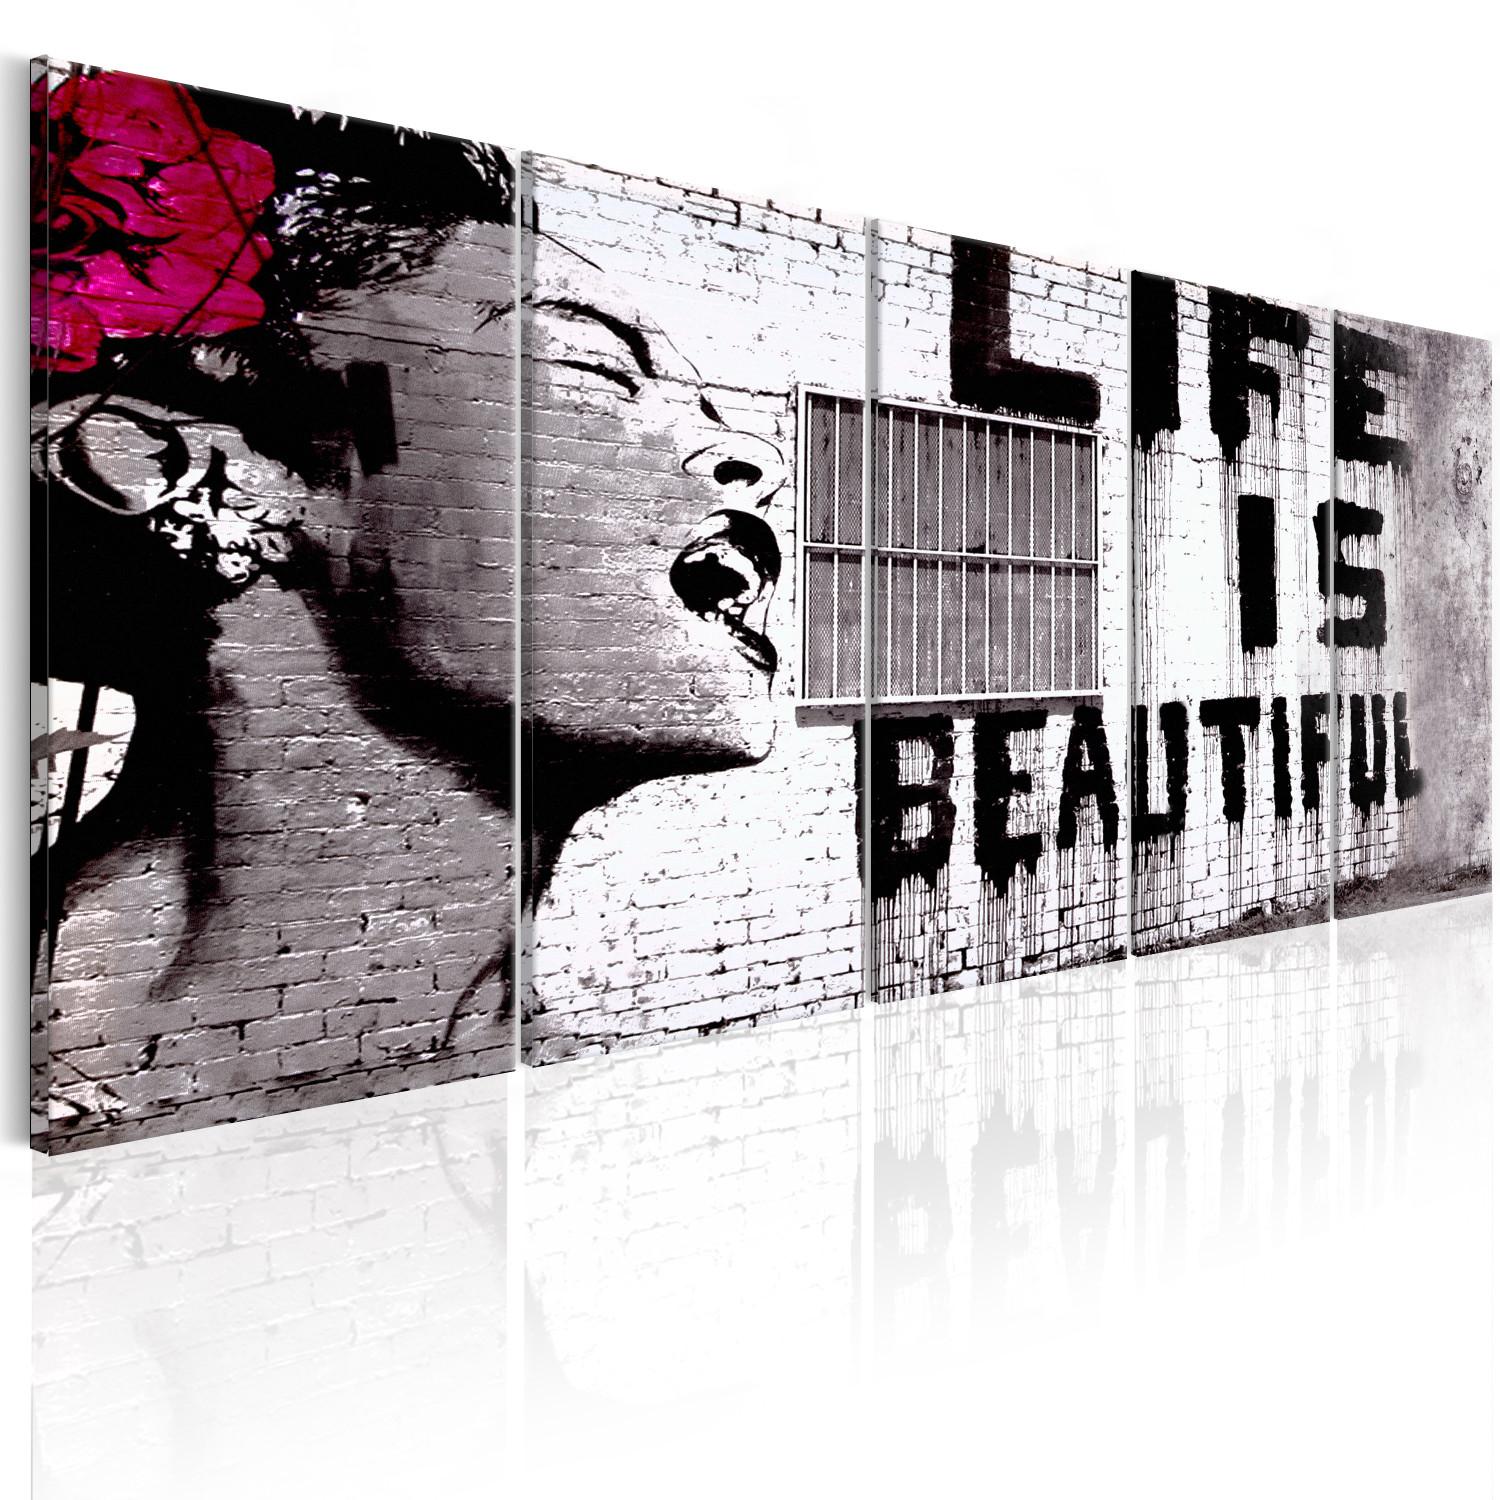 Cuadro decorativo Banksy: Life is Beautiful